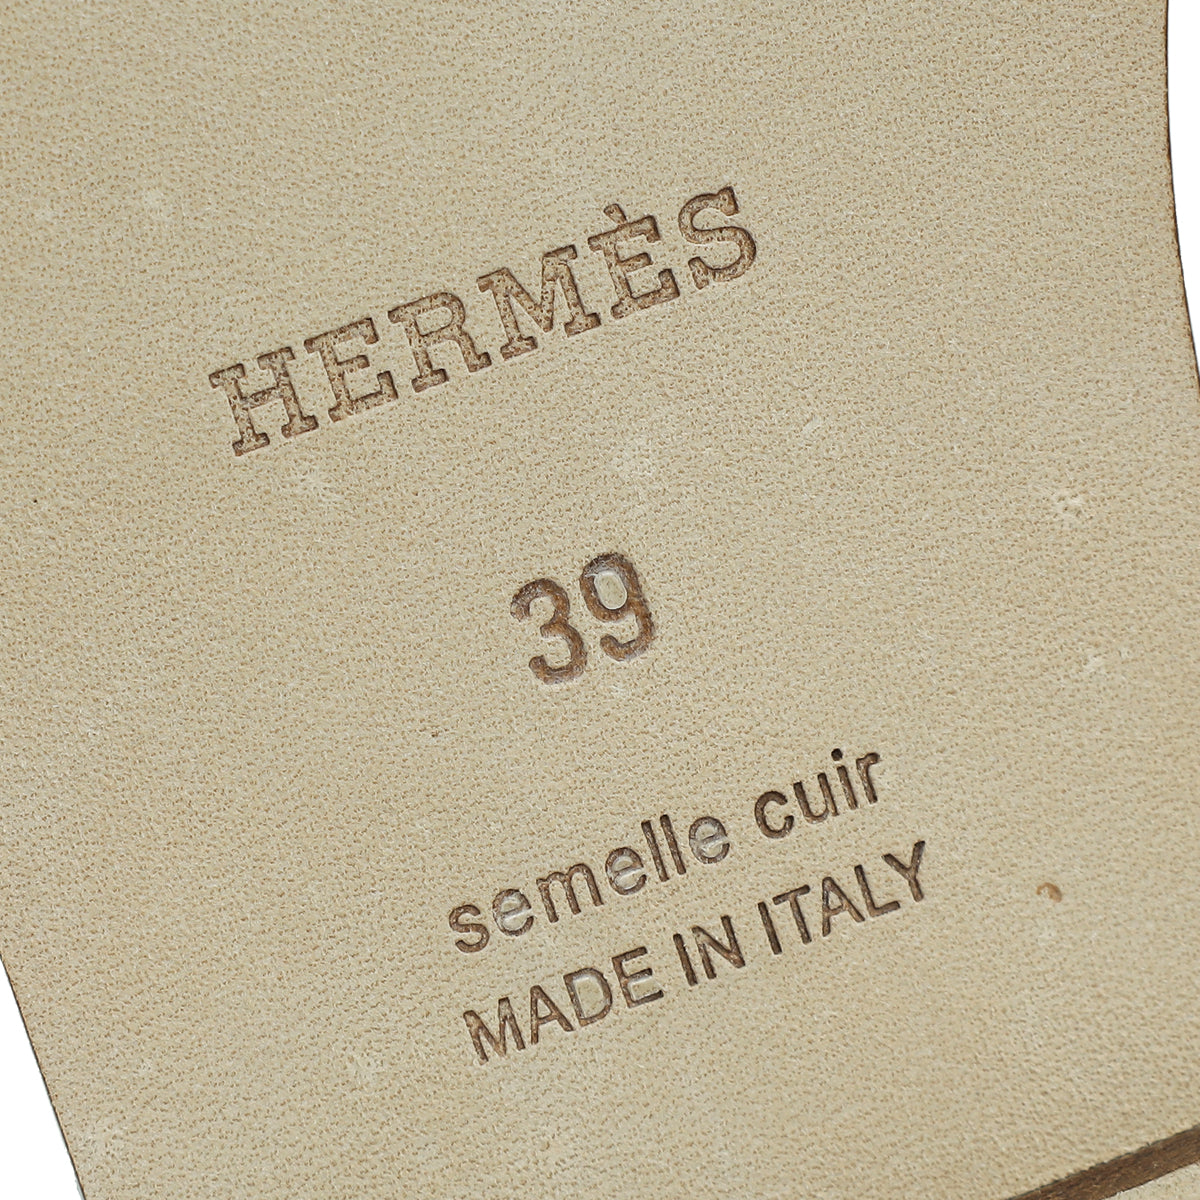 Hermes Gold Oran Pique Sandals 39